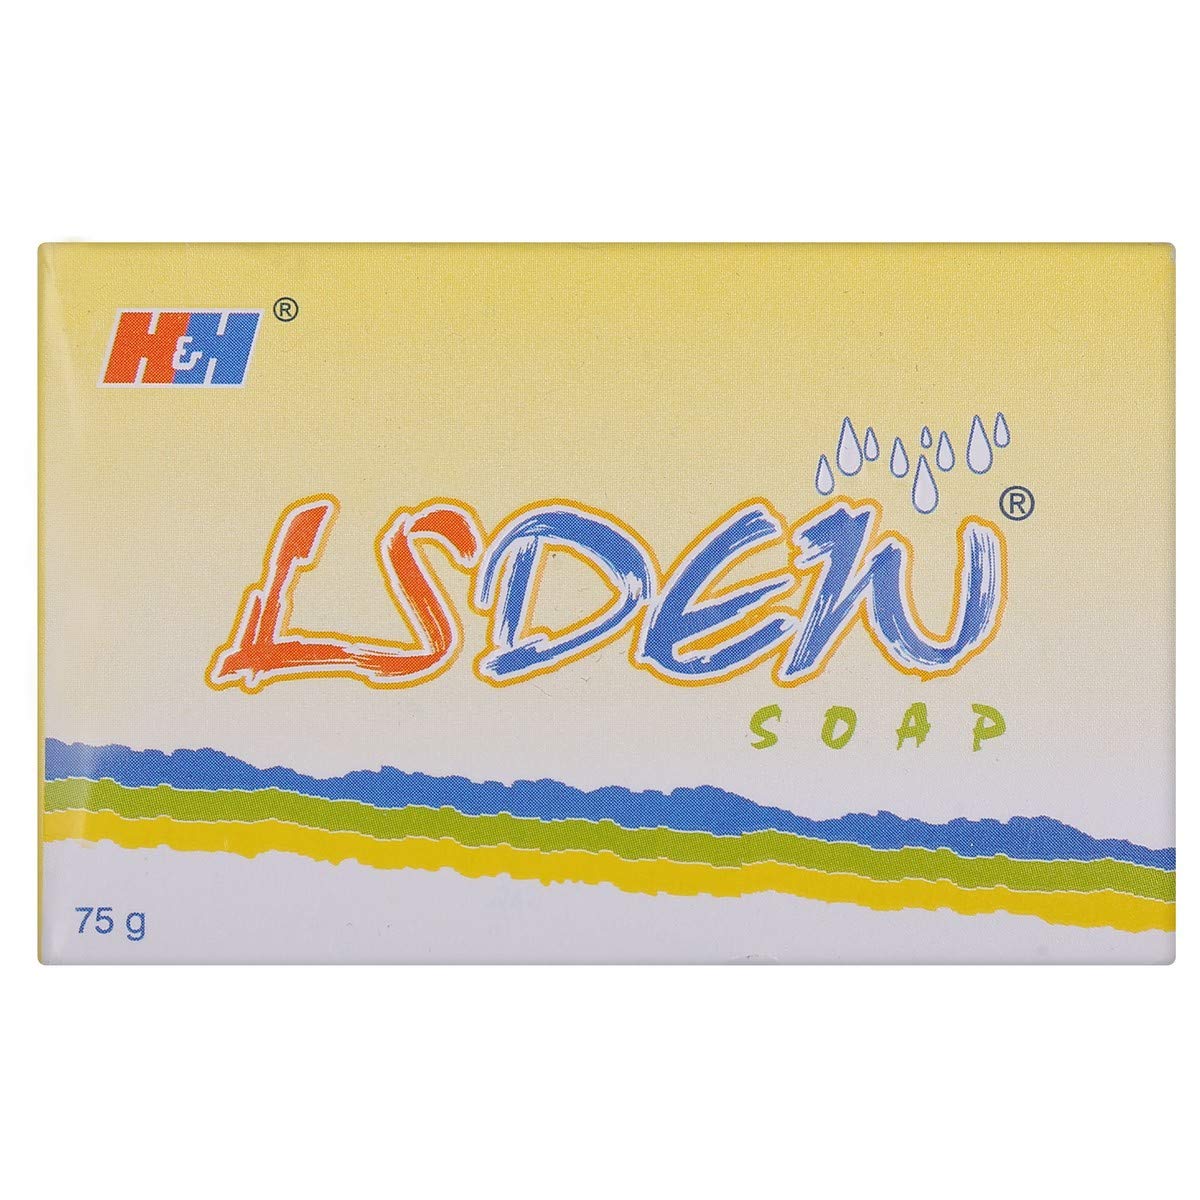 LSDew Soap, 75gm